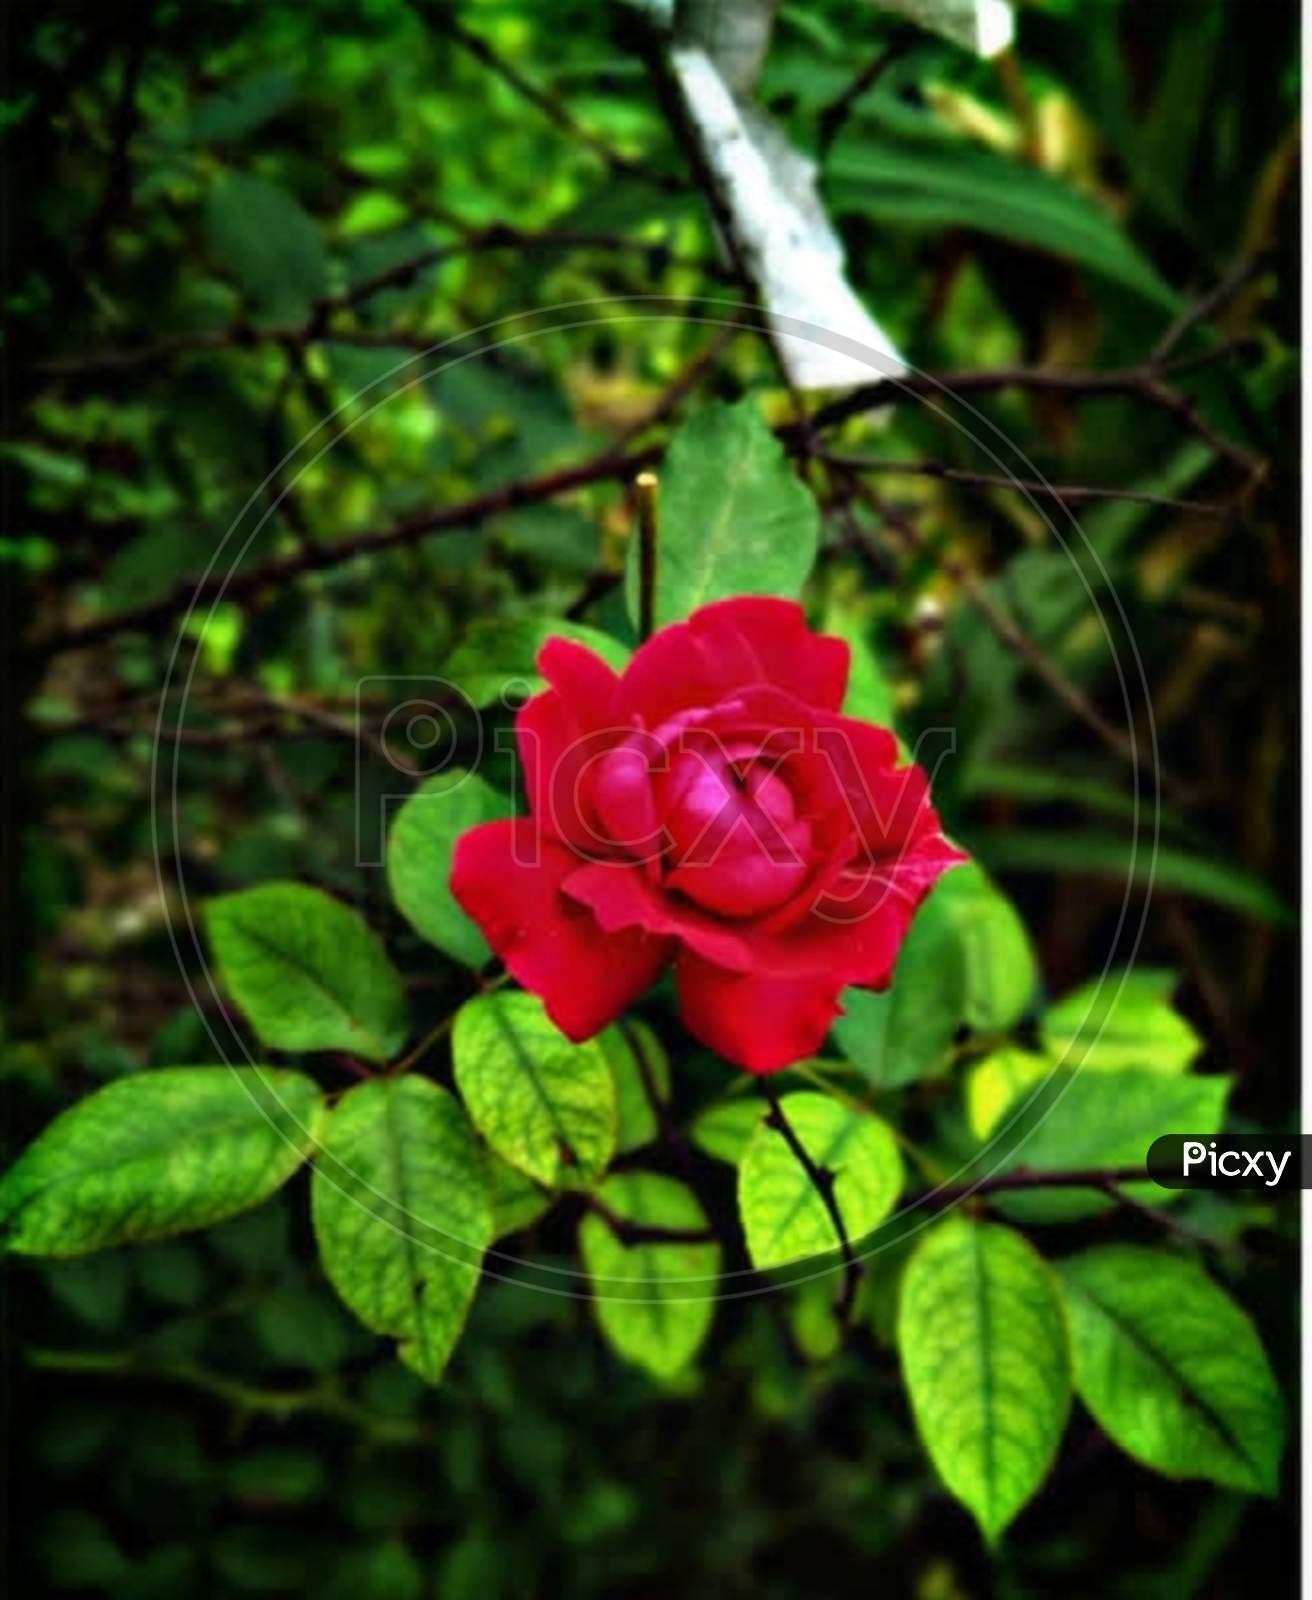 Red×Remove  Pink×Remove  Flowering plant×Remove  Plant×Remove  Flower×Remove  Petal×Remove  Rose×Remove  Floribunda×Remove  Garden roses×Remove  Hybrid tea rose×Remove